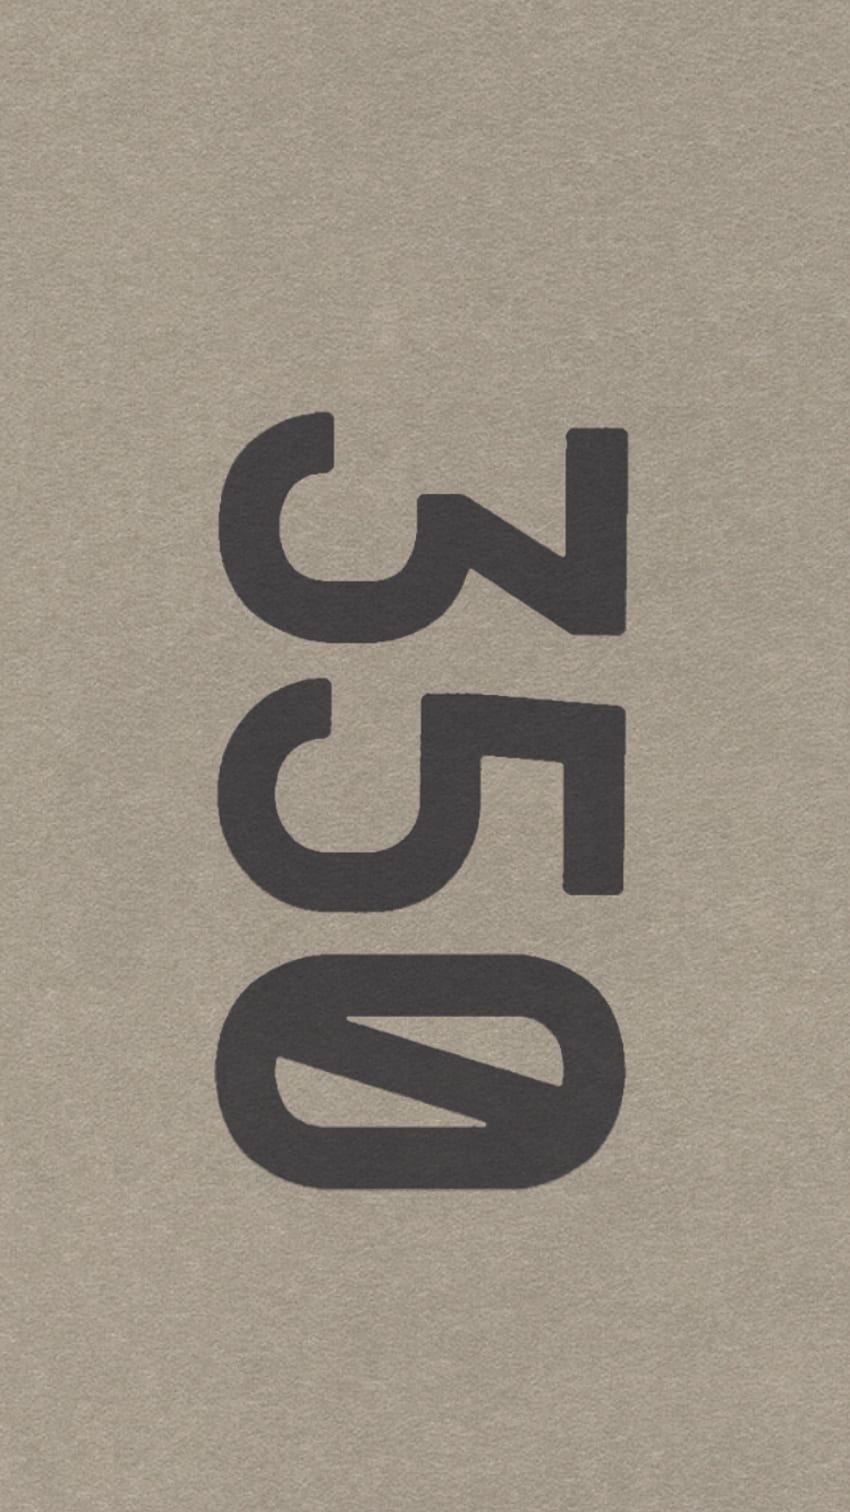 Unpaired Beluga Adidas Yeezy Boost 350 Shoe garage iPhone Wallpapers  Free Download